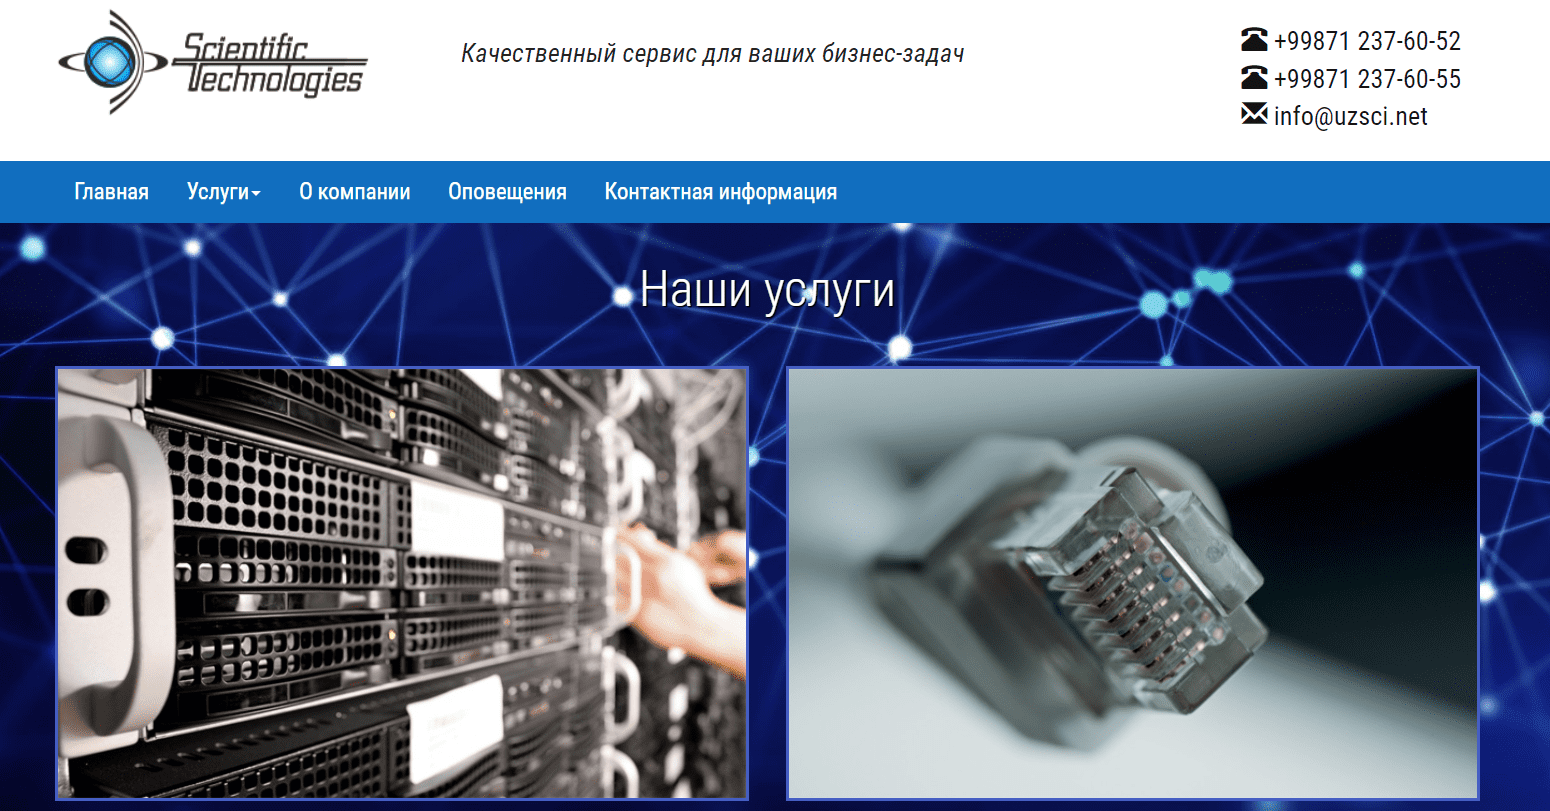 Scientific Technologies (uzsci.net) - официальный сайт